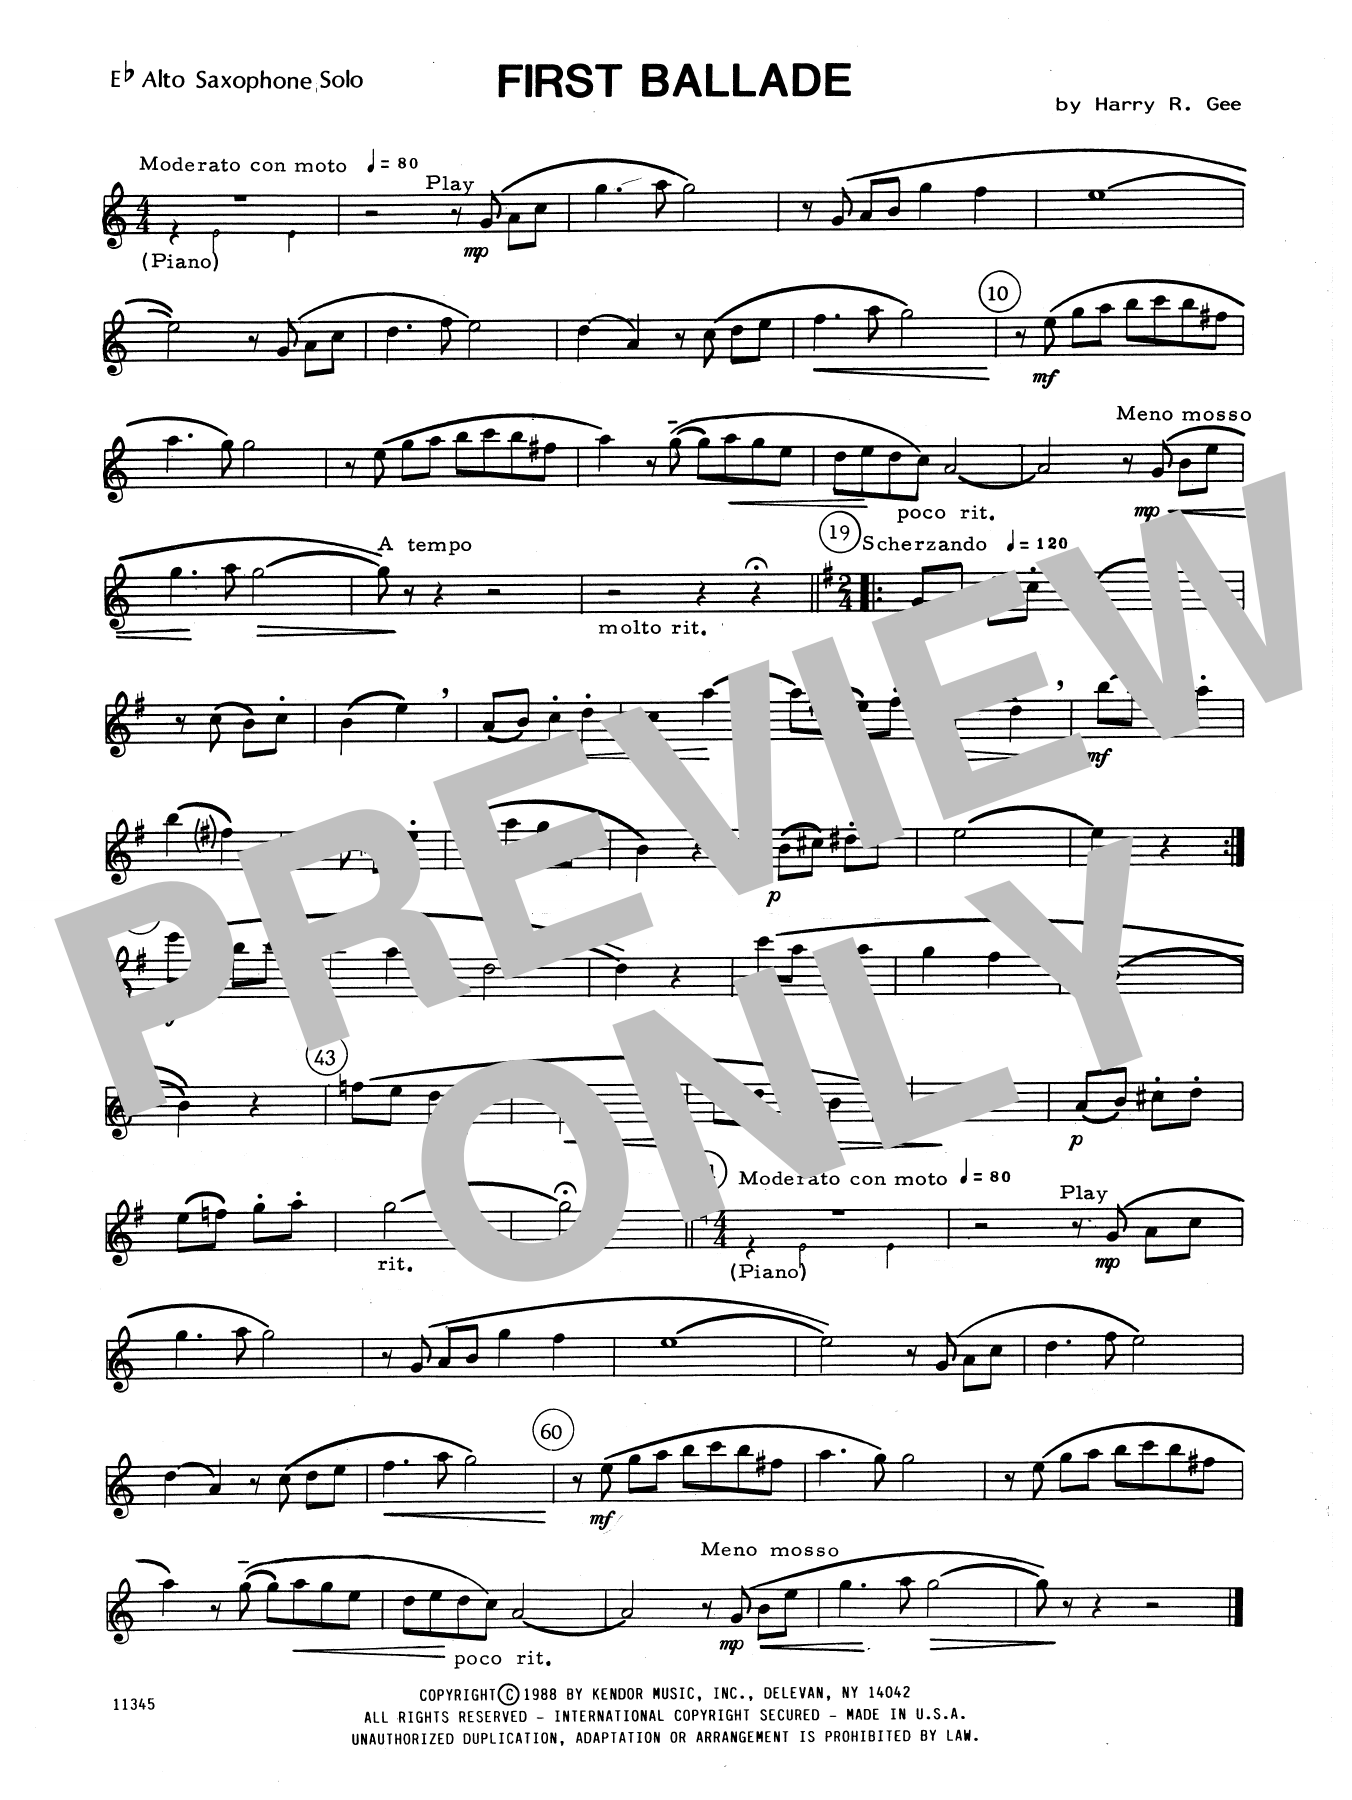 Download Harry Gee First Ballade - Eb Alto Saxophone Sheet Music